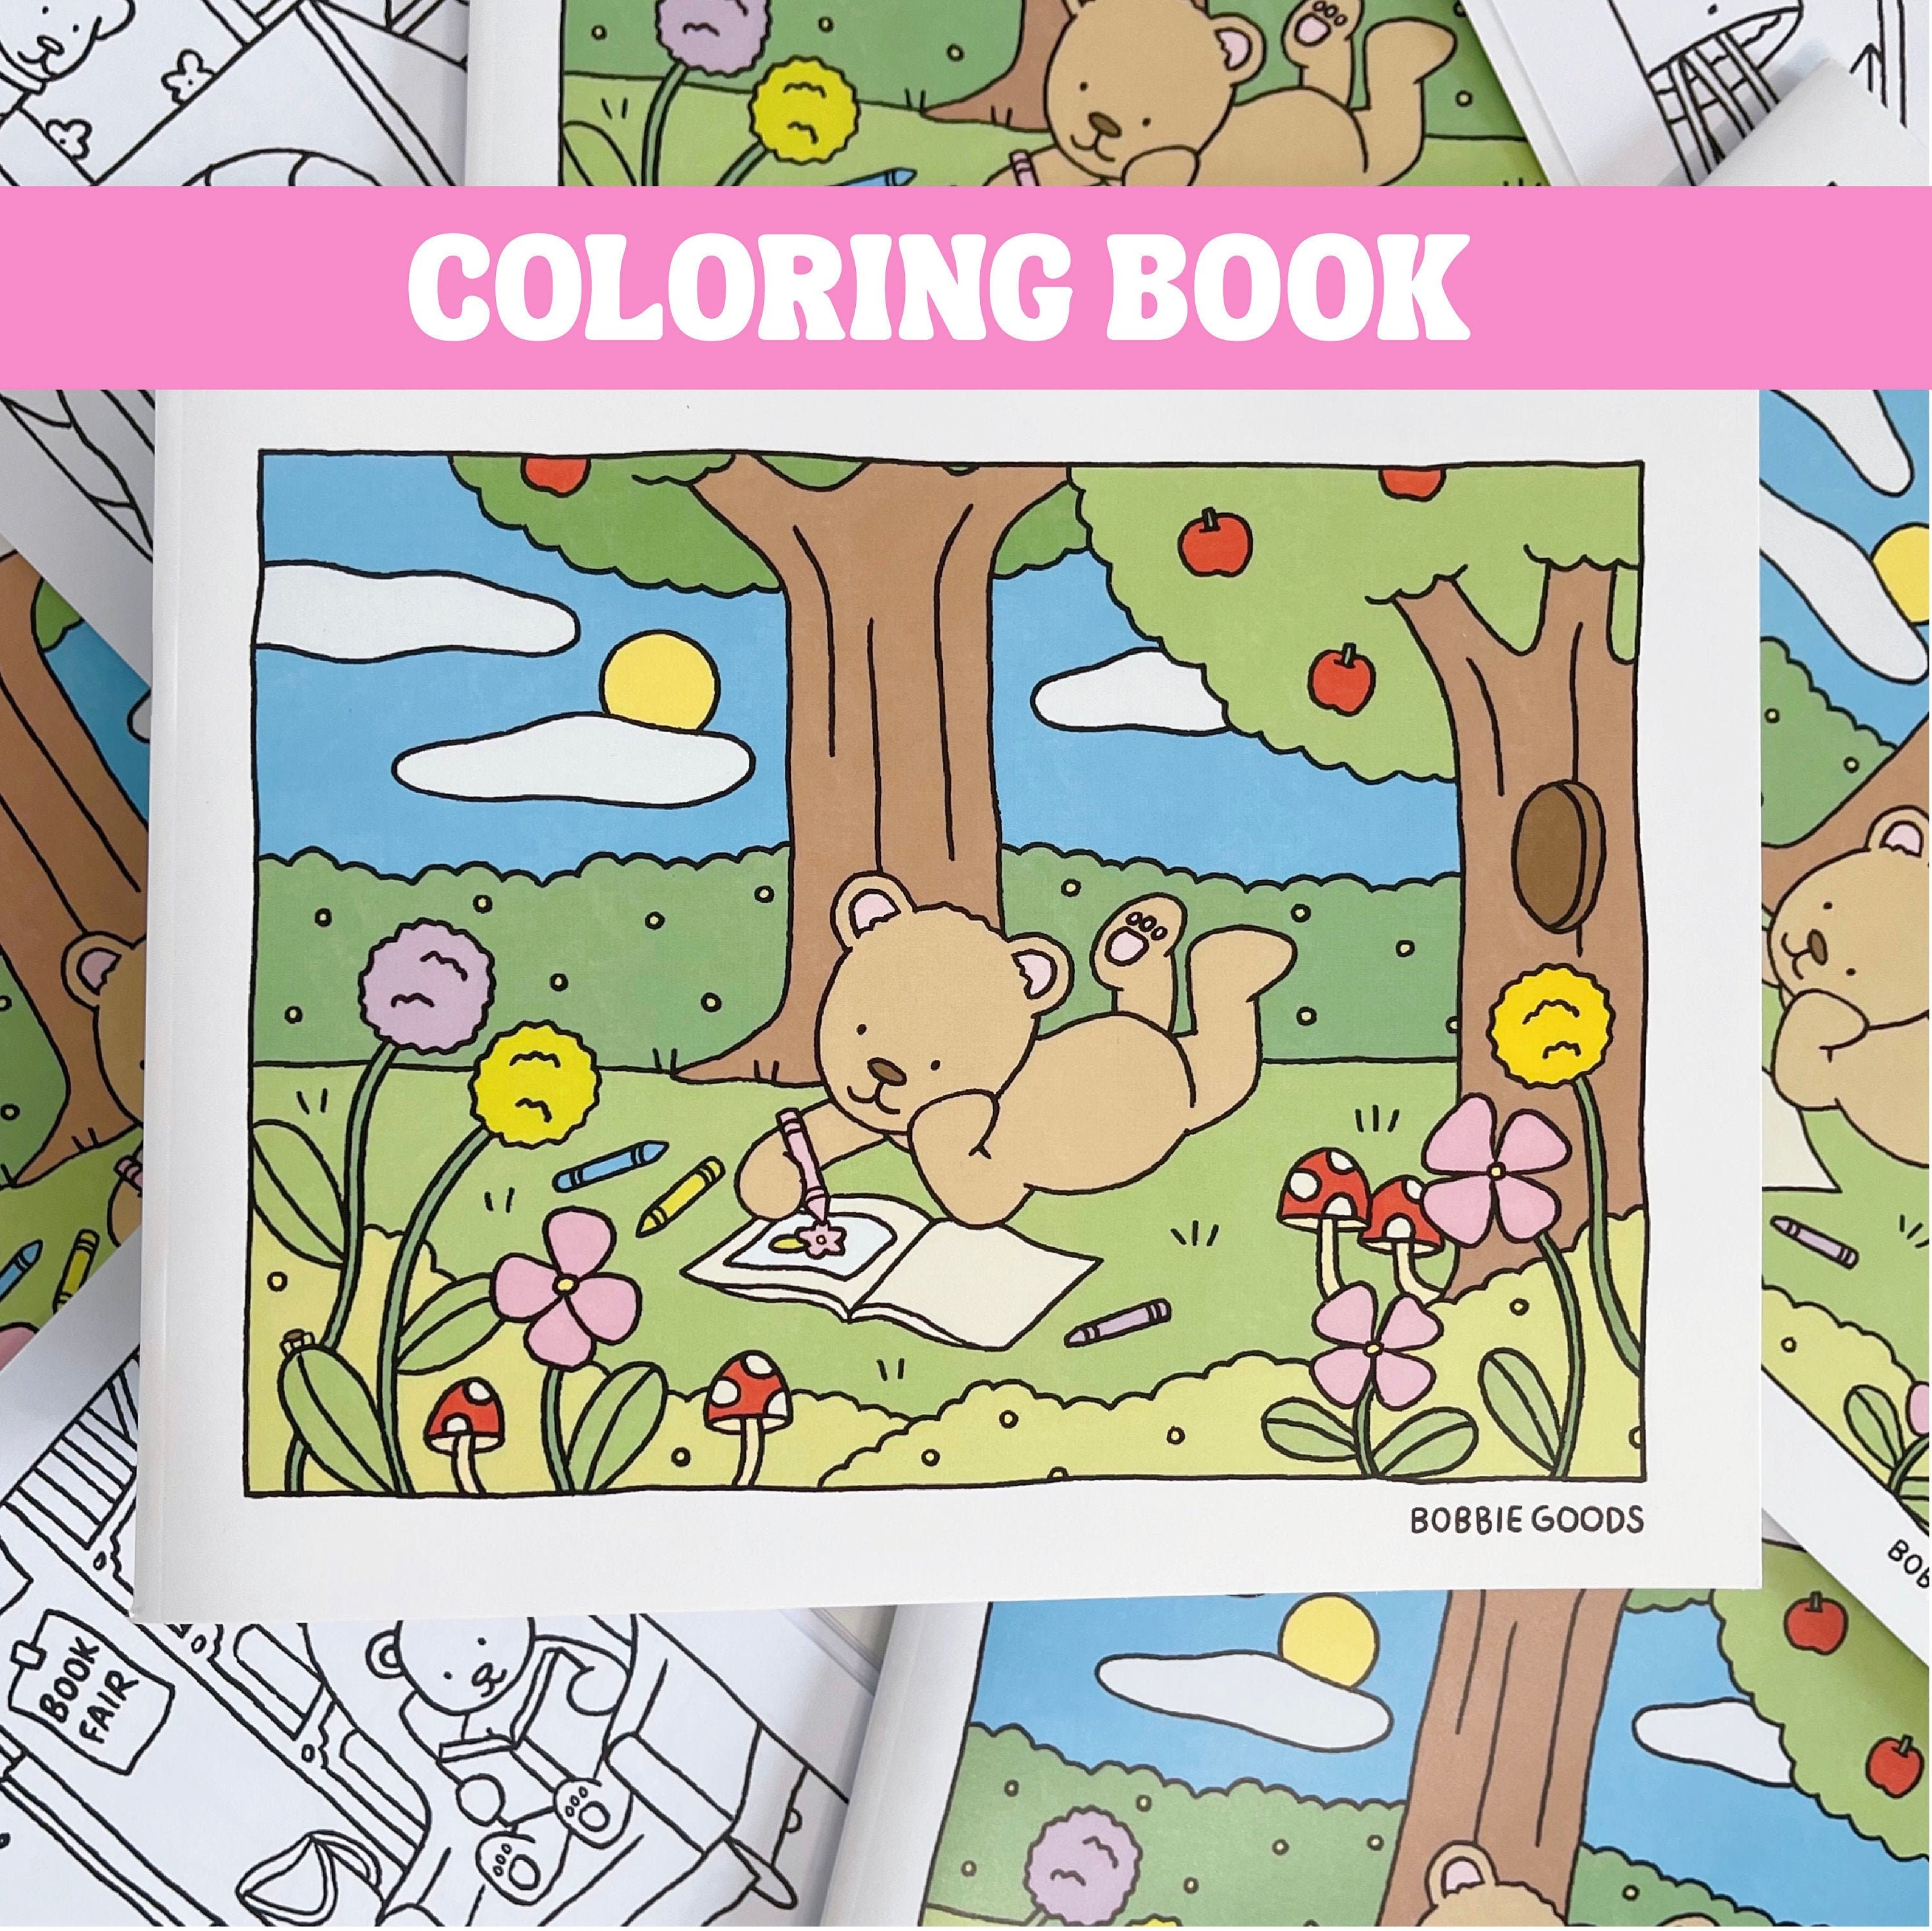 PDF Coloring Book Bobbie Goods Compress